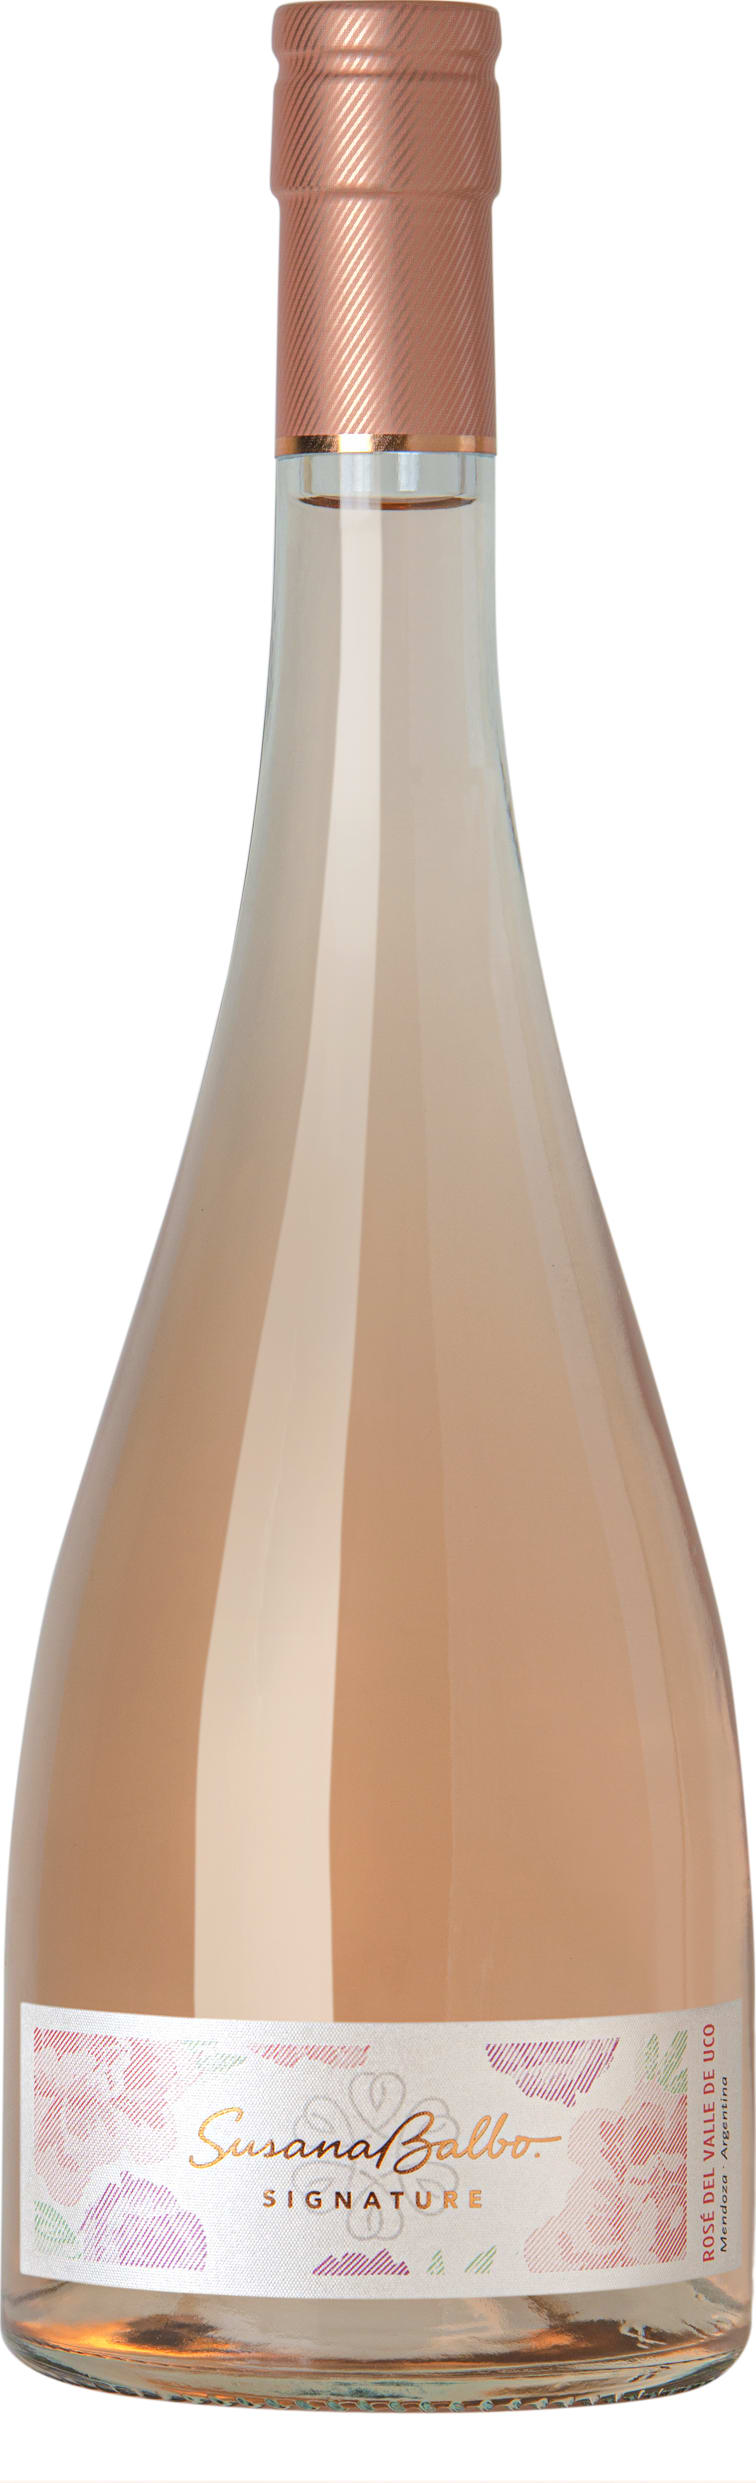 Susana Balbo Signature Rose 2021 75cl - Buy Susana Balbo Wines from GREAT WINES DIRECT wine shop